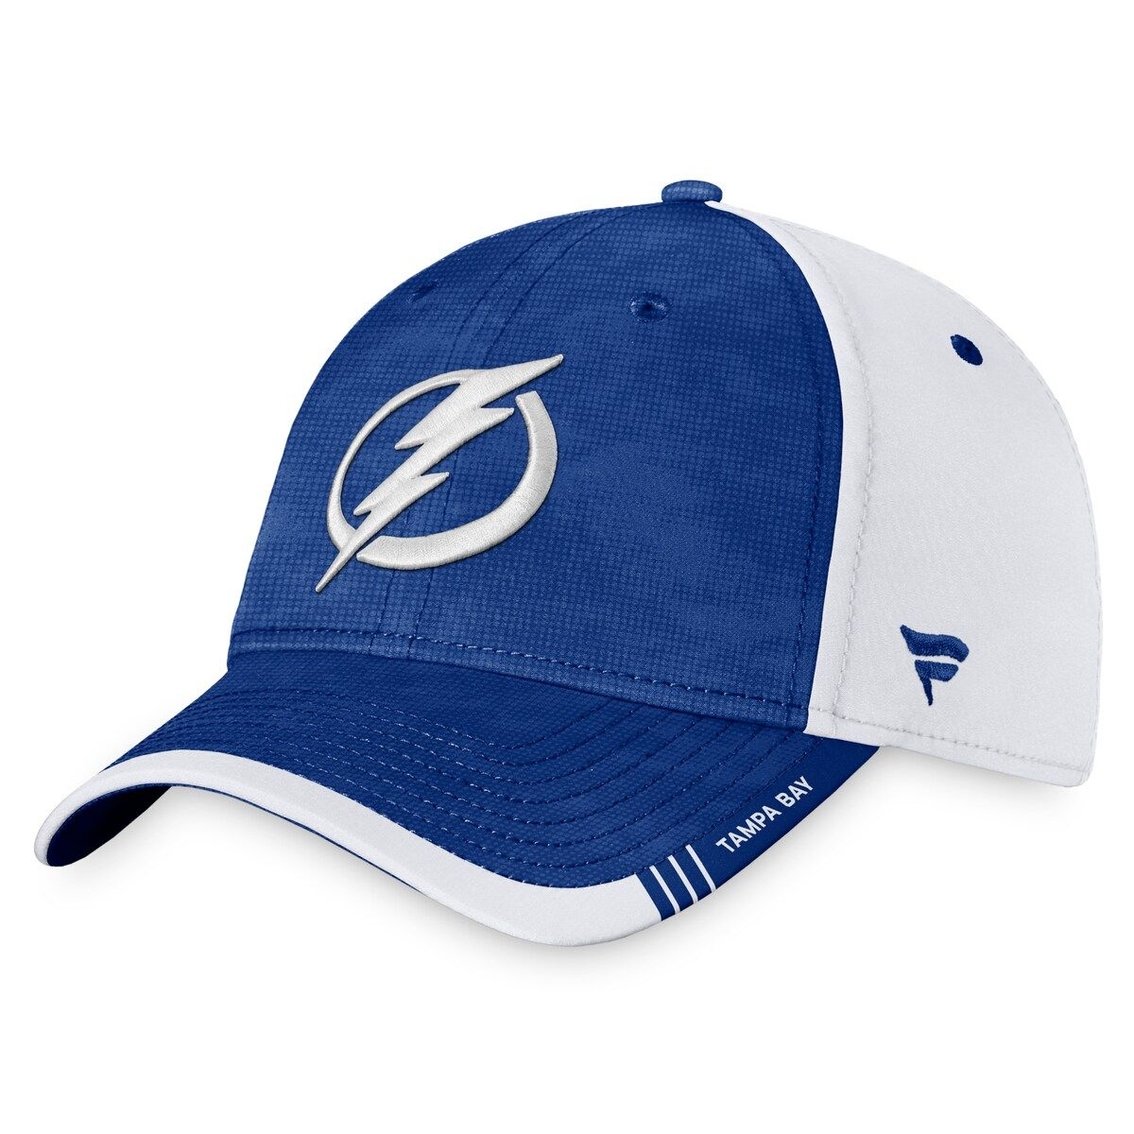 Fanatics Branded Men's Blue/White Tampa Bay Lightning Authentic Pro Rink Camo Flex Hat - Image 2 of 4